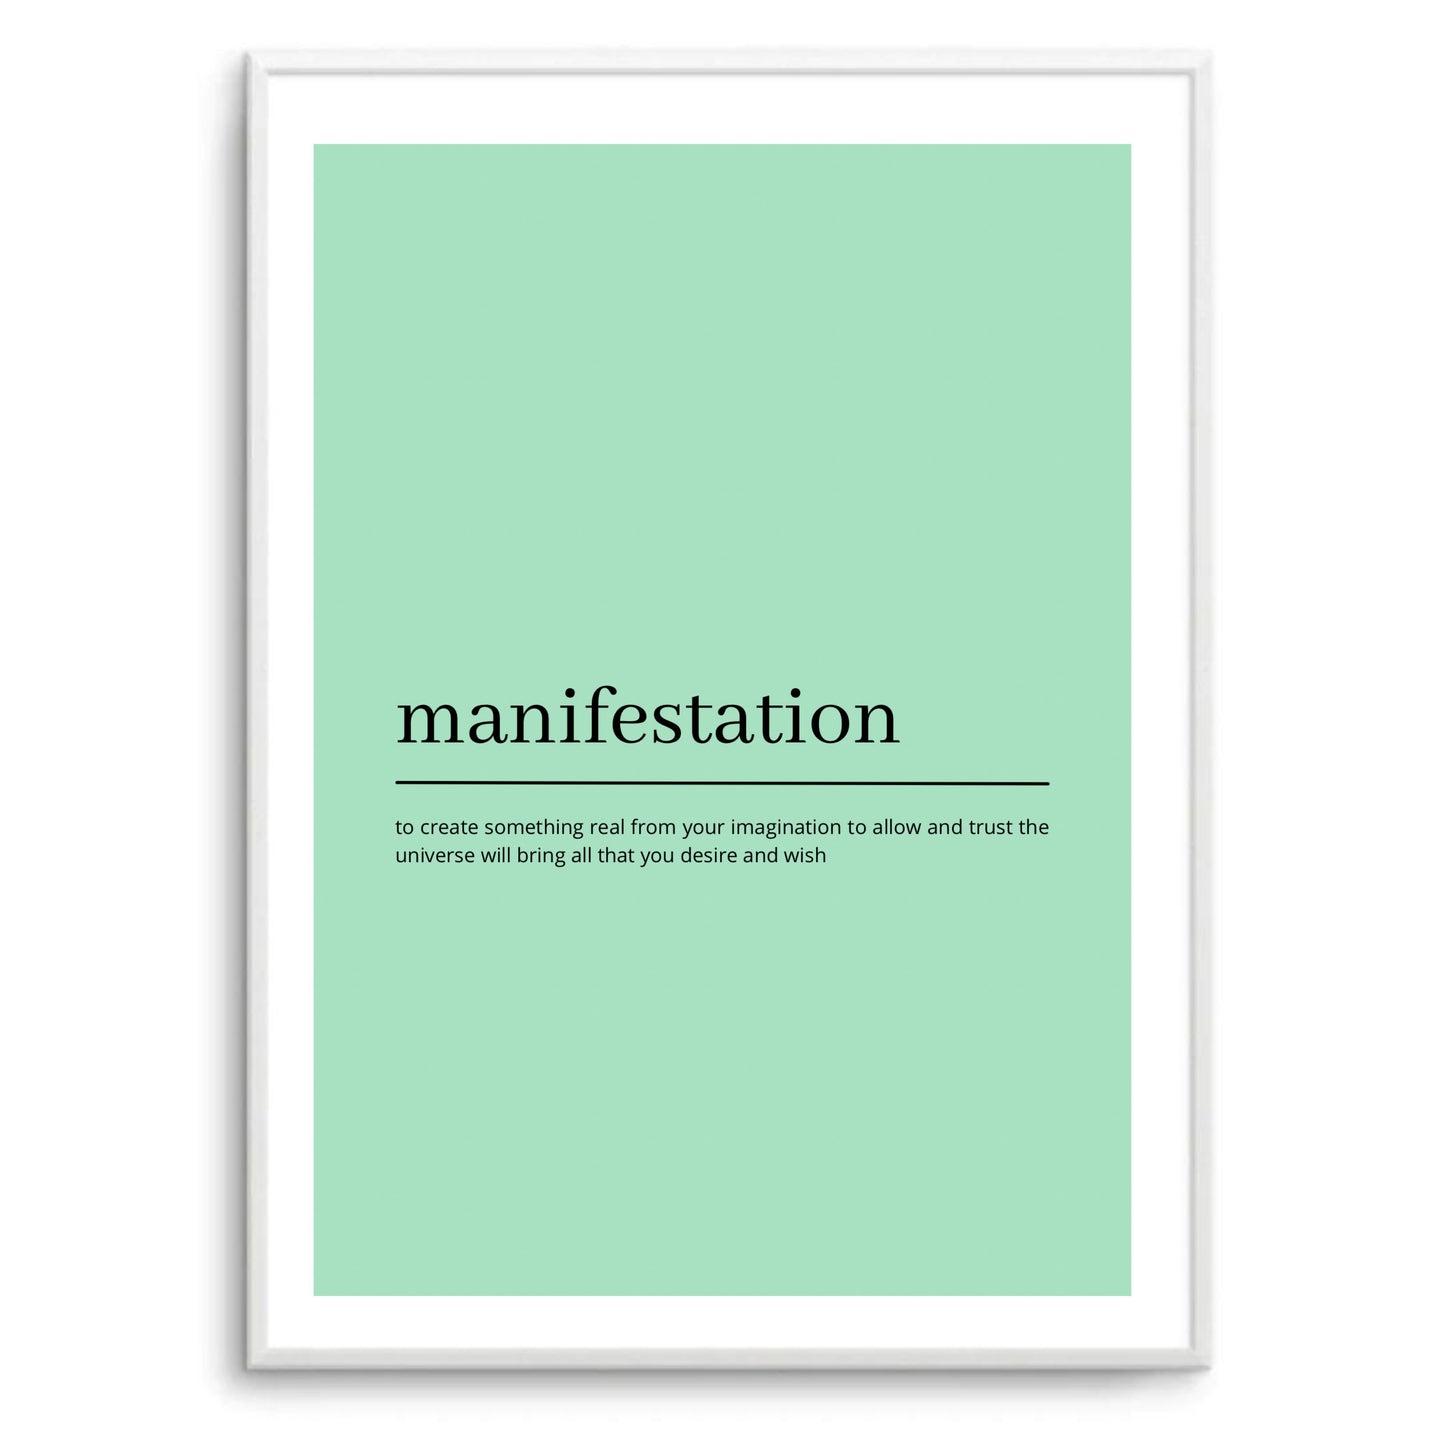 Manifestation Definition